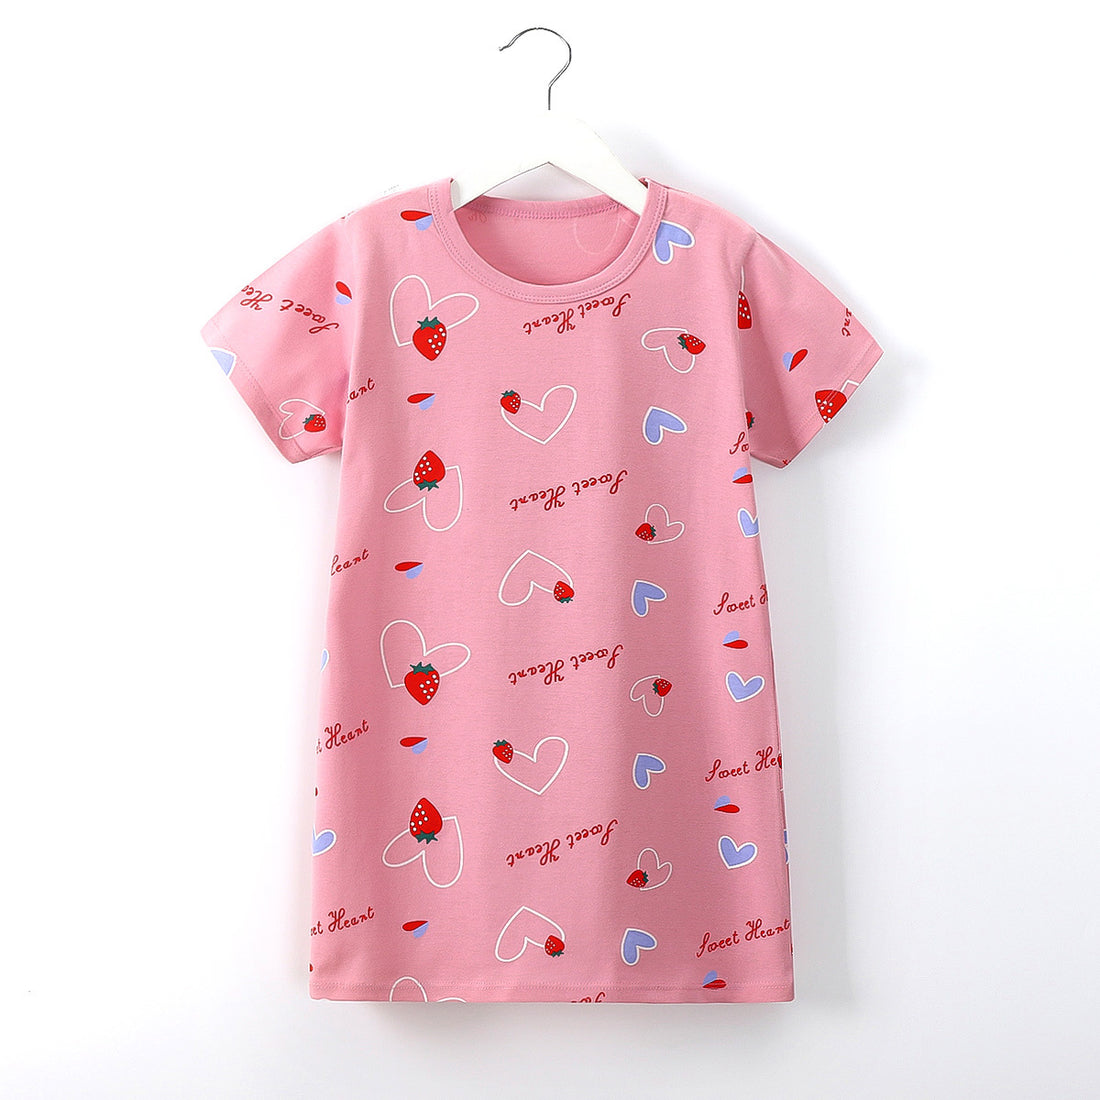 [351319] - Mini Daster Kaos Lengan Pendek Import Anak Perempuan - Motif Strawberry Heart